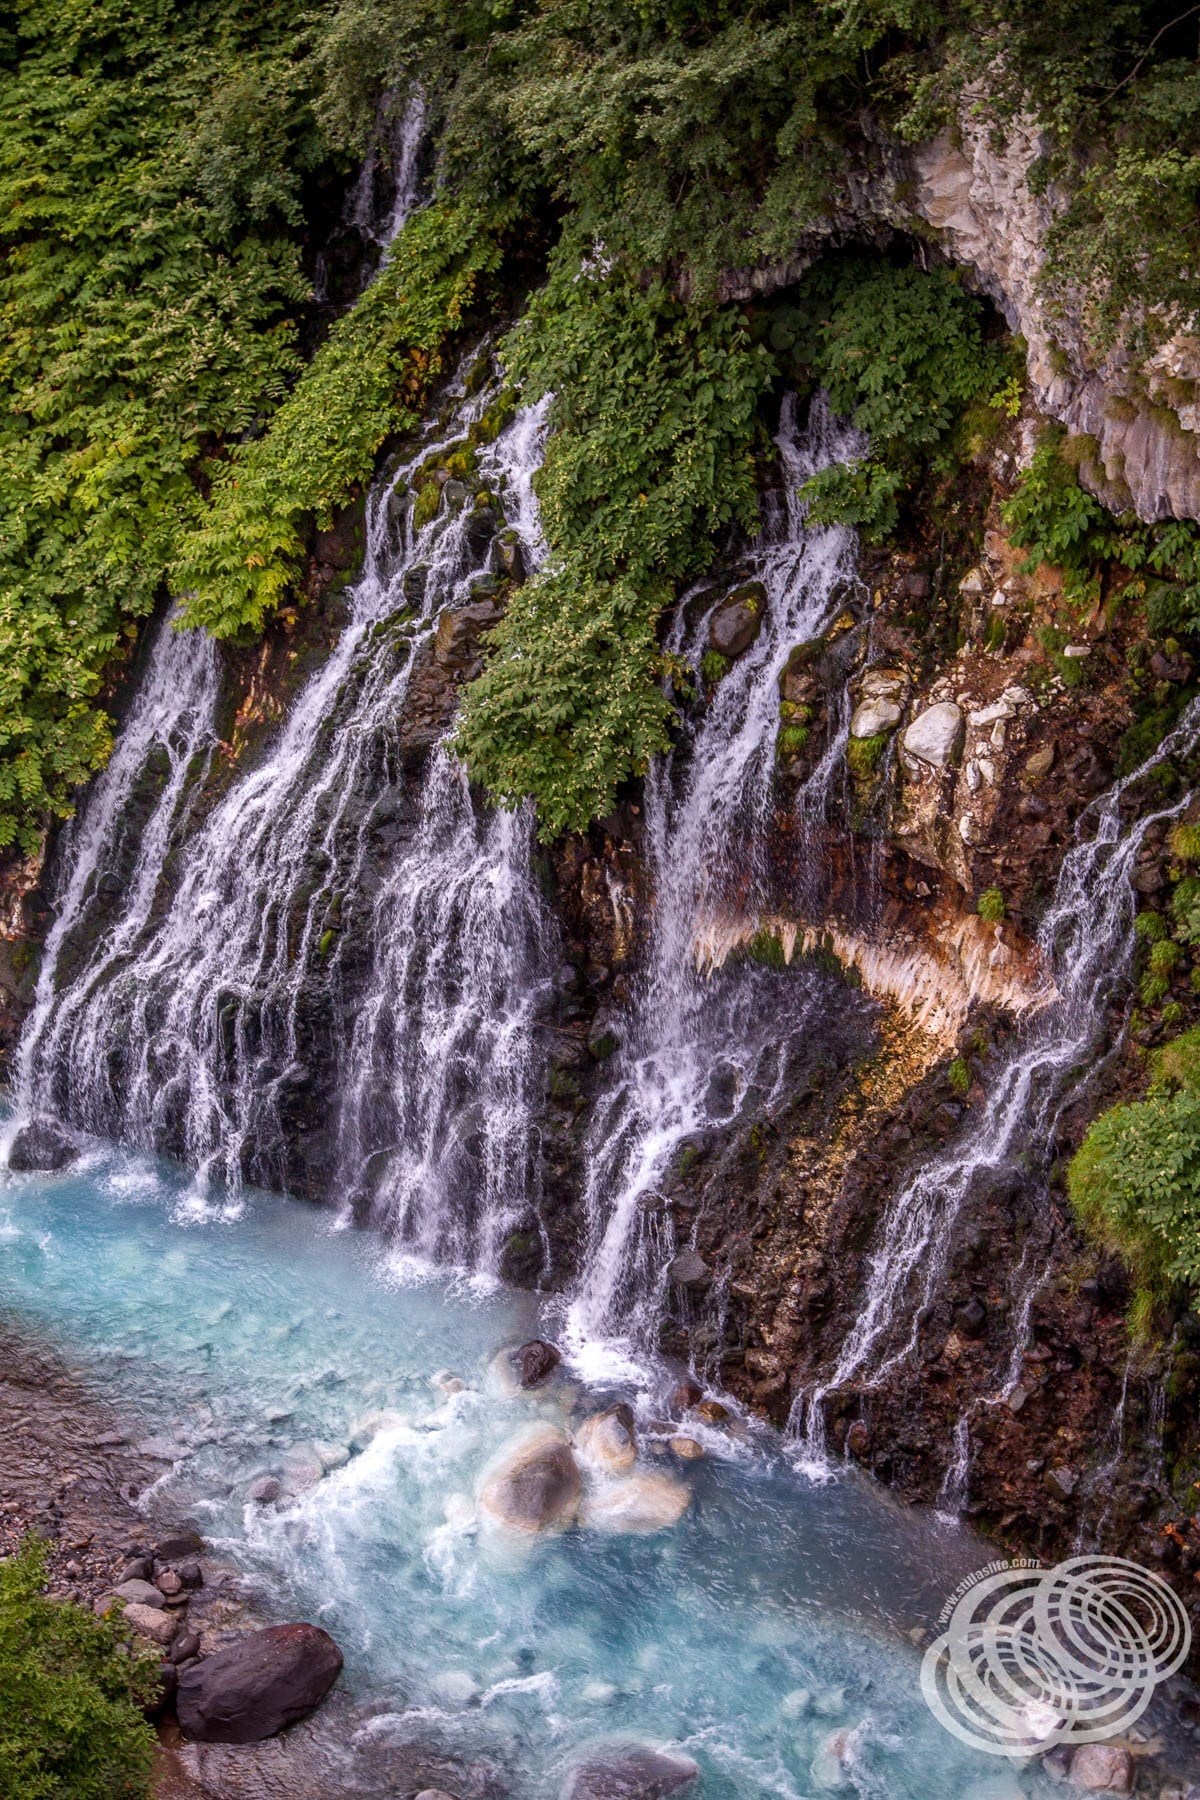 Shirahige Waterfall